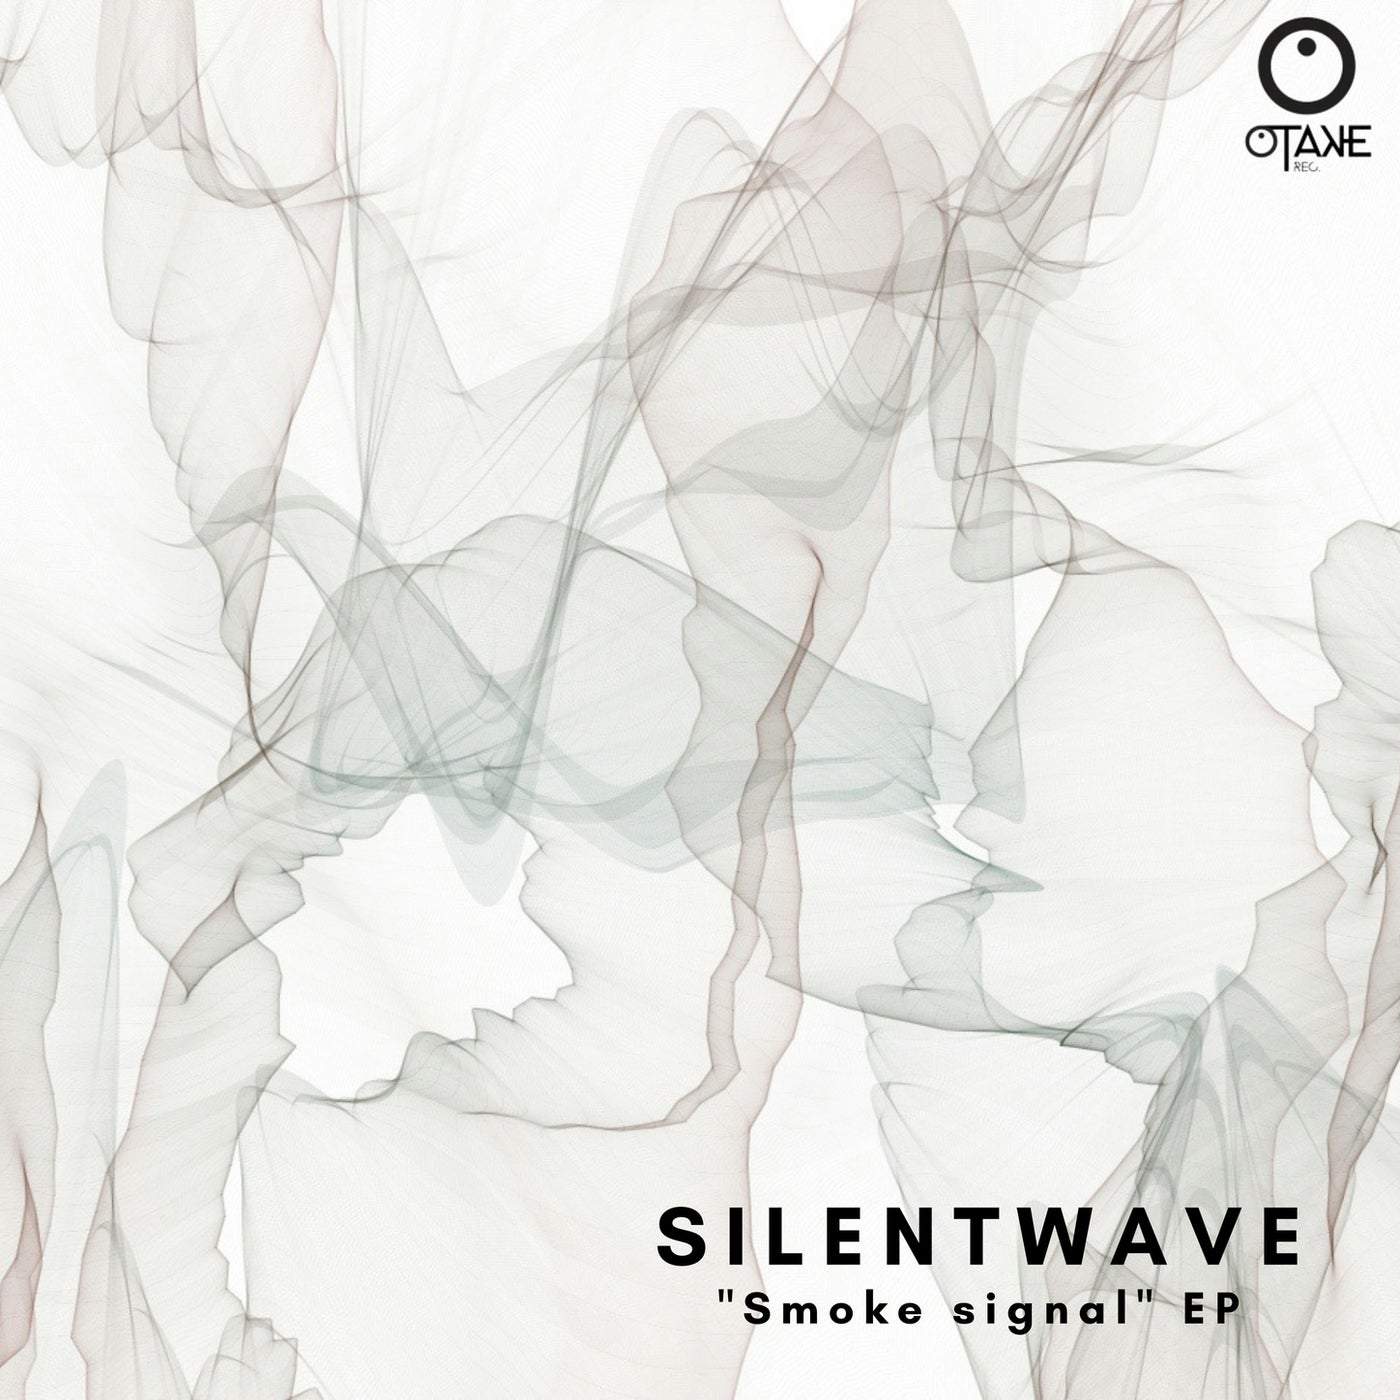 image cover: Silentwave - Smoke Signal EP / OTAKE054